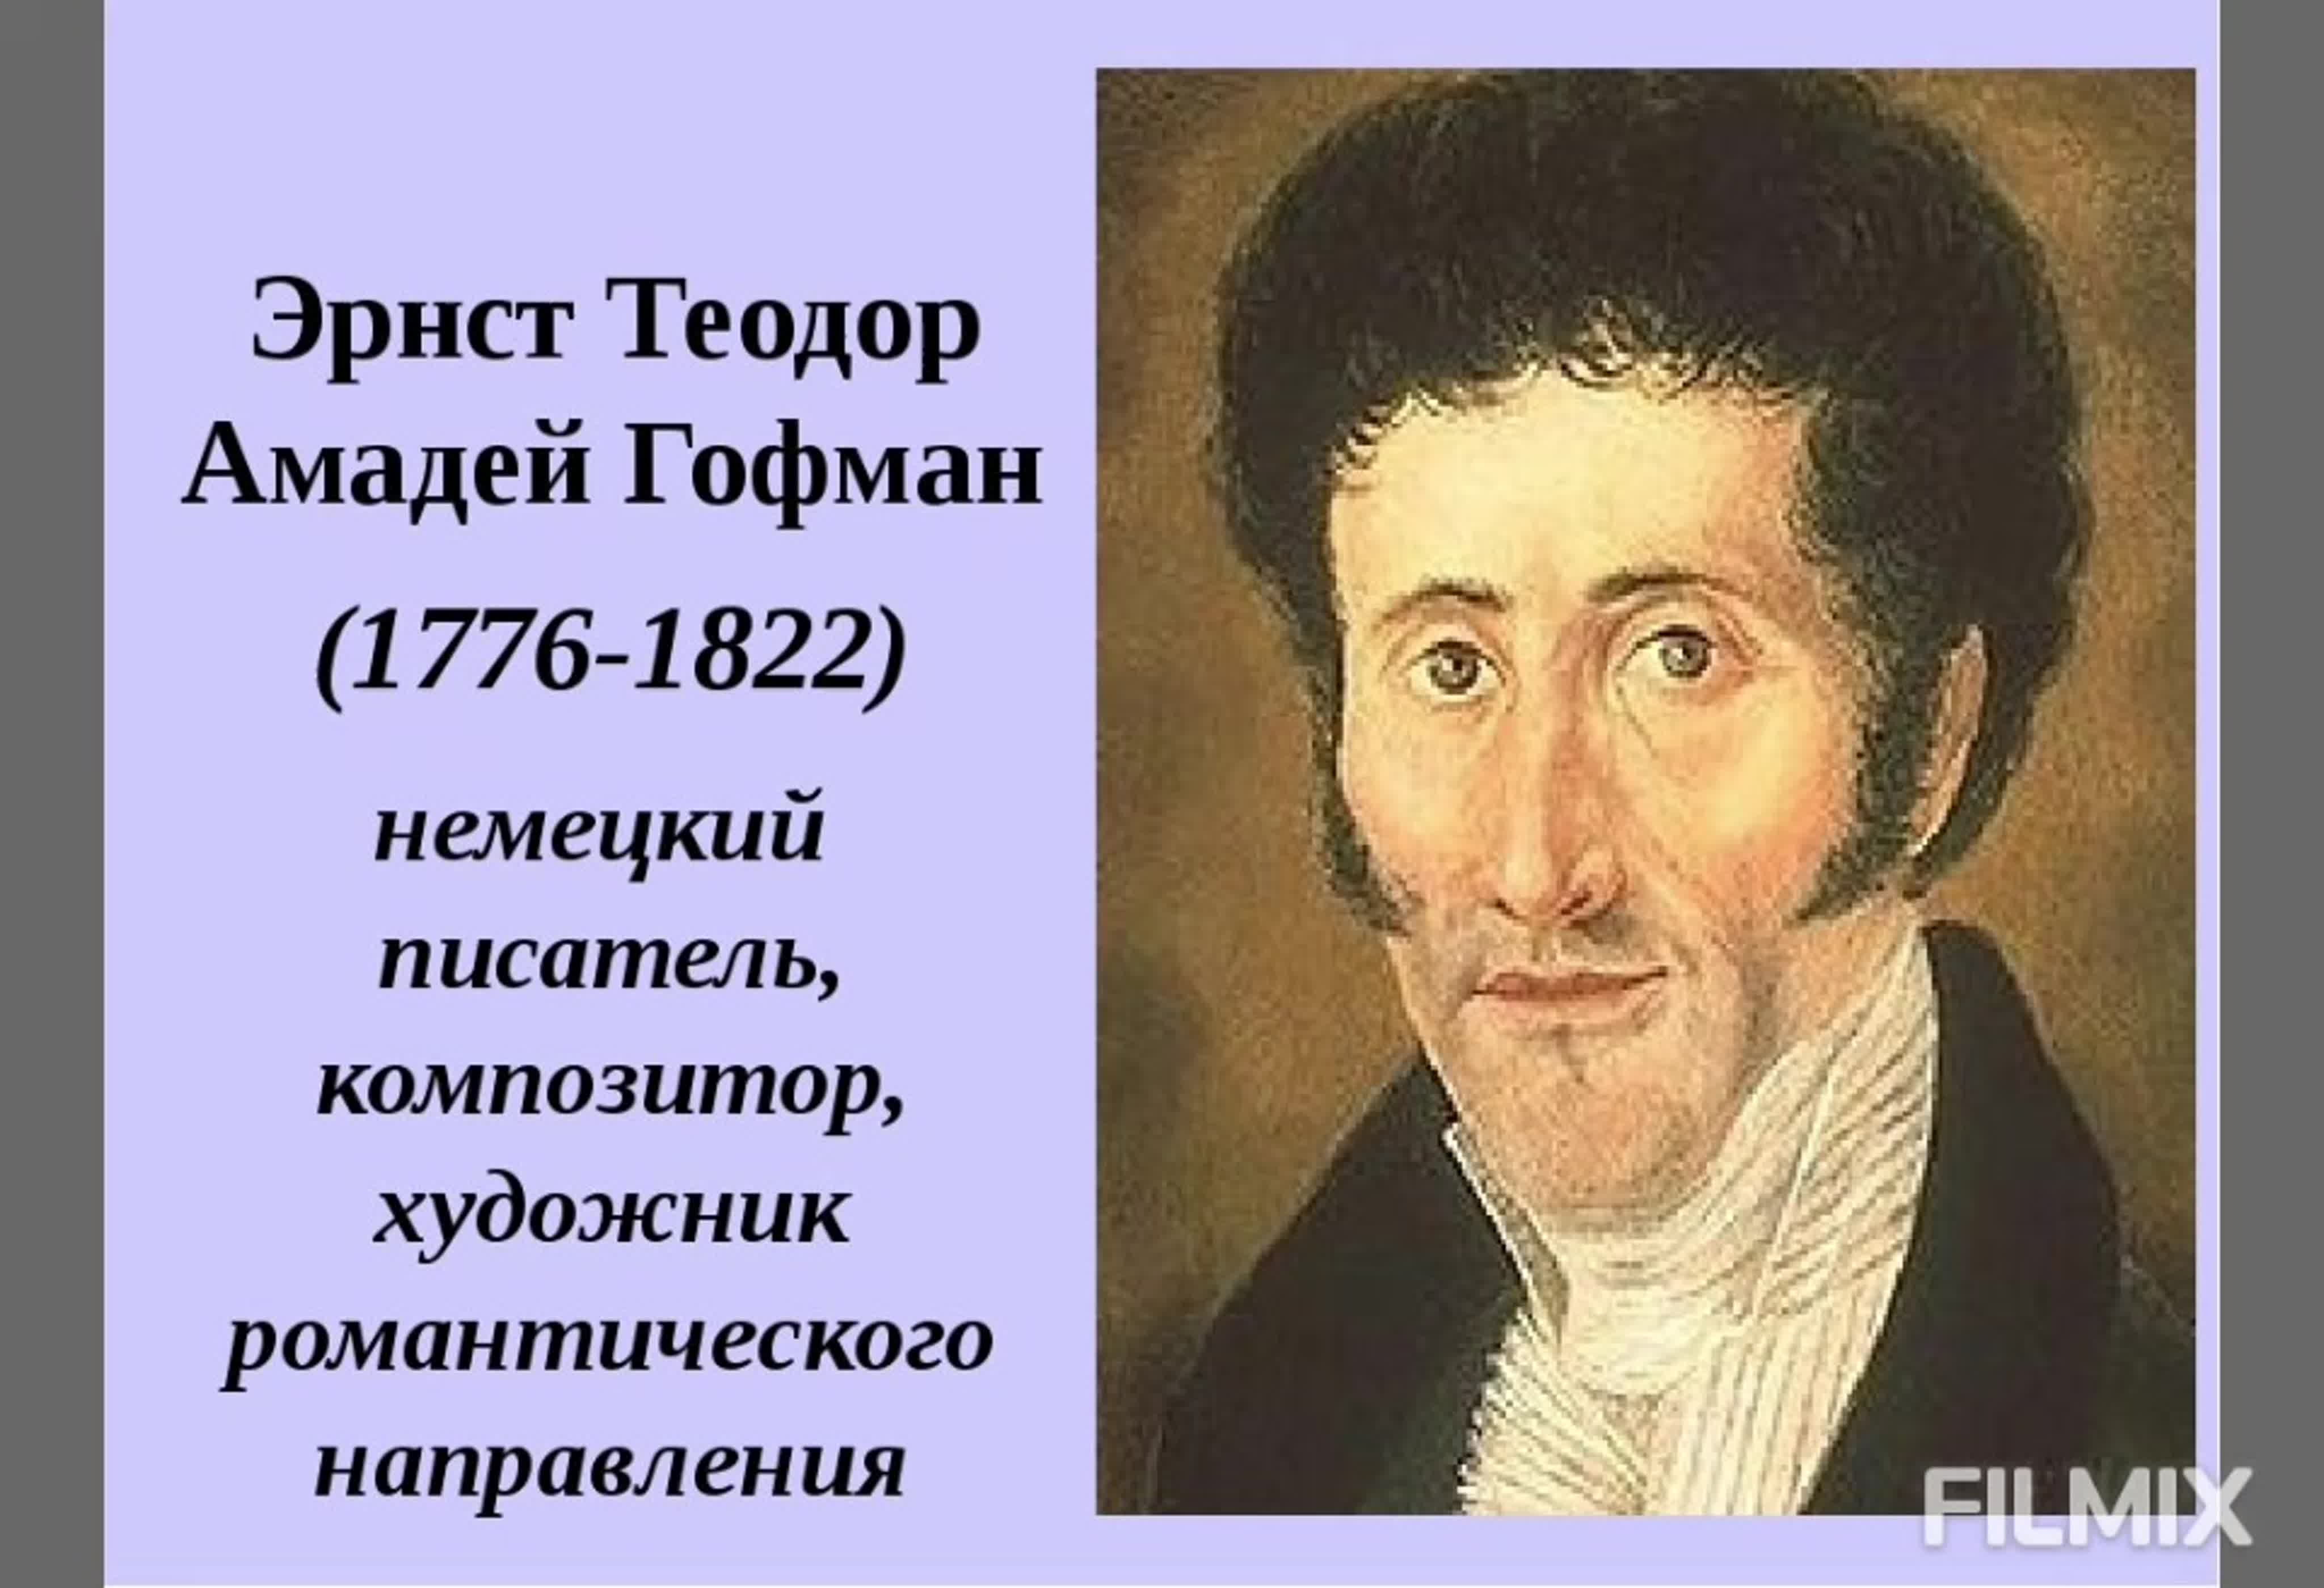 Теодор Амадей Гофман, великий сумасброд